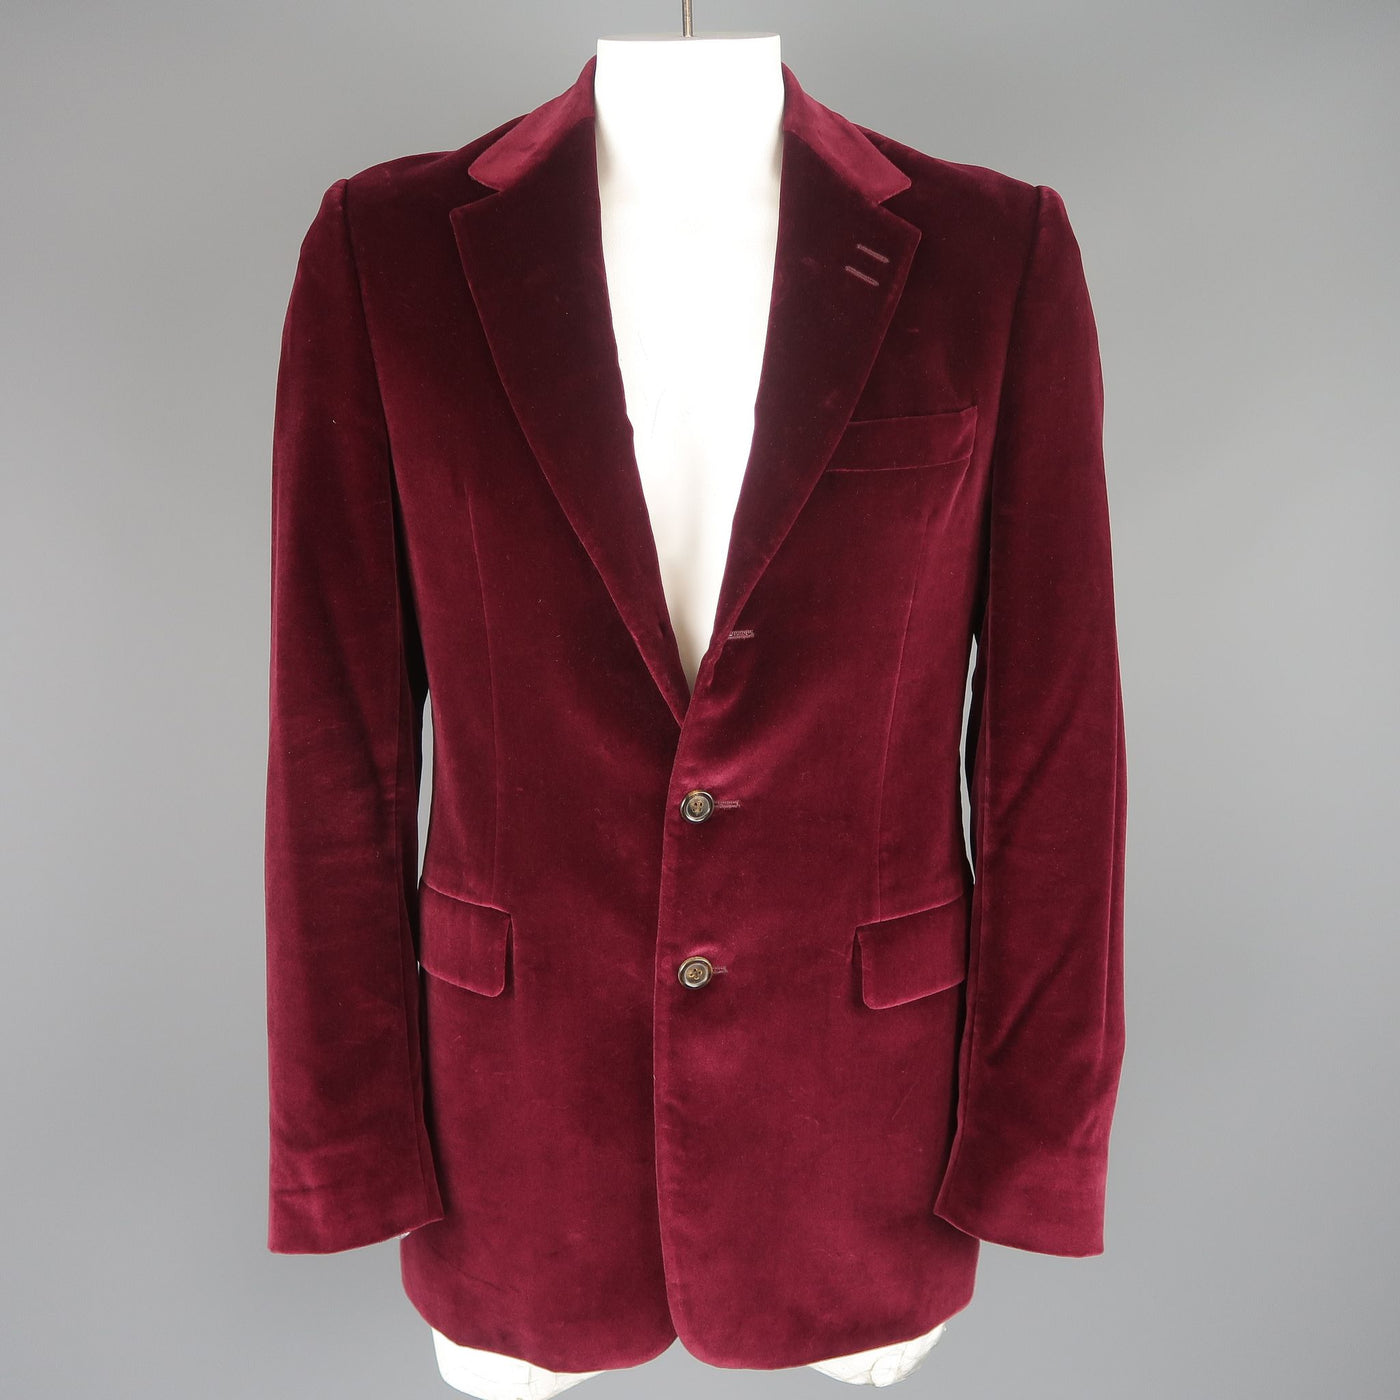 PAUL SMITH 40 Long Burgundy Velvet Notch Lapel Sport Coat Jacket